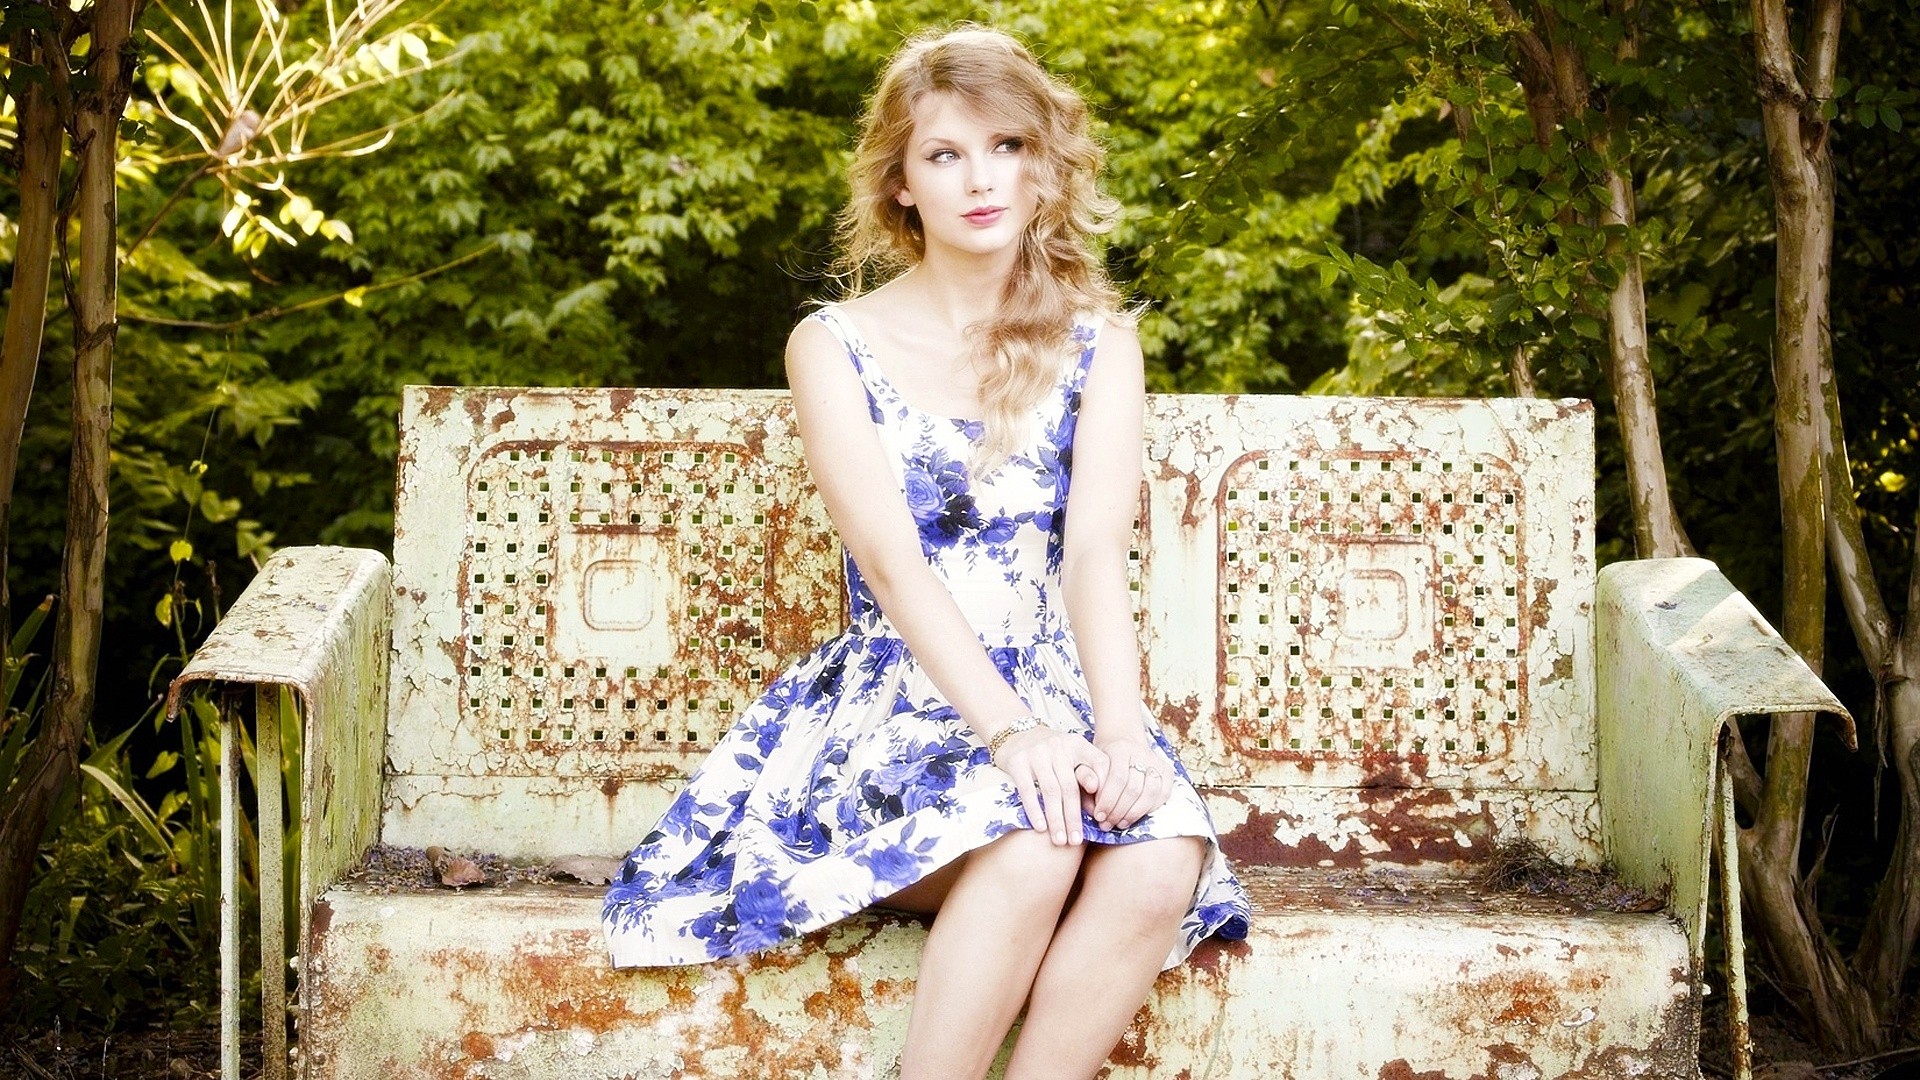 blondes, women, nature, Taylor Swift, celebrity, bench - desktop wallpaper